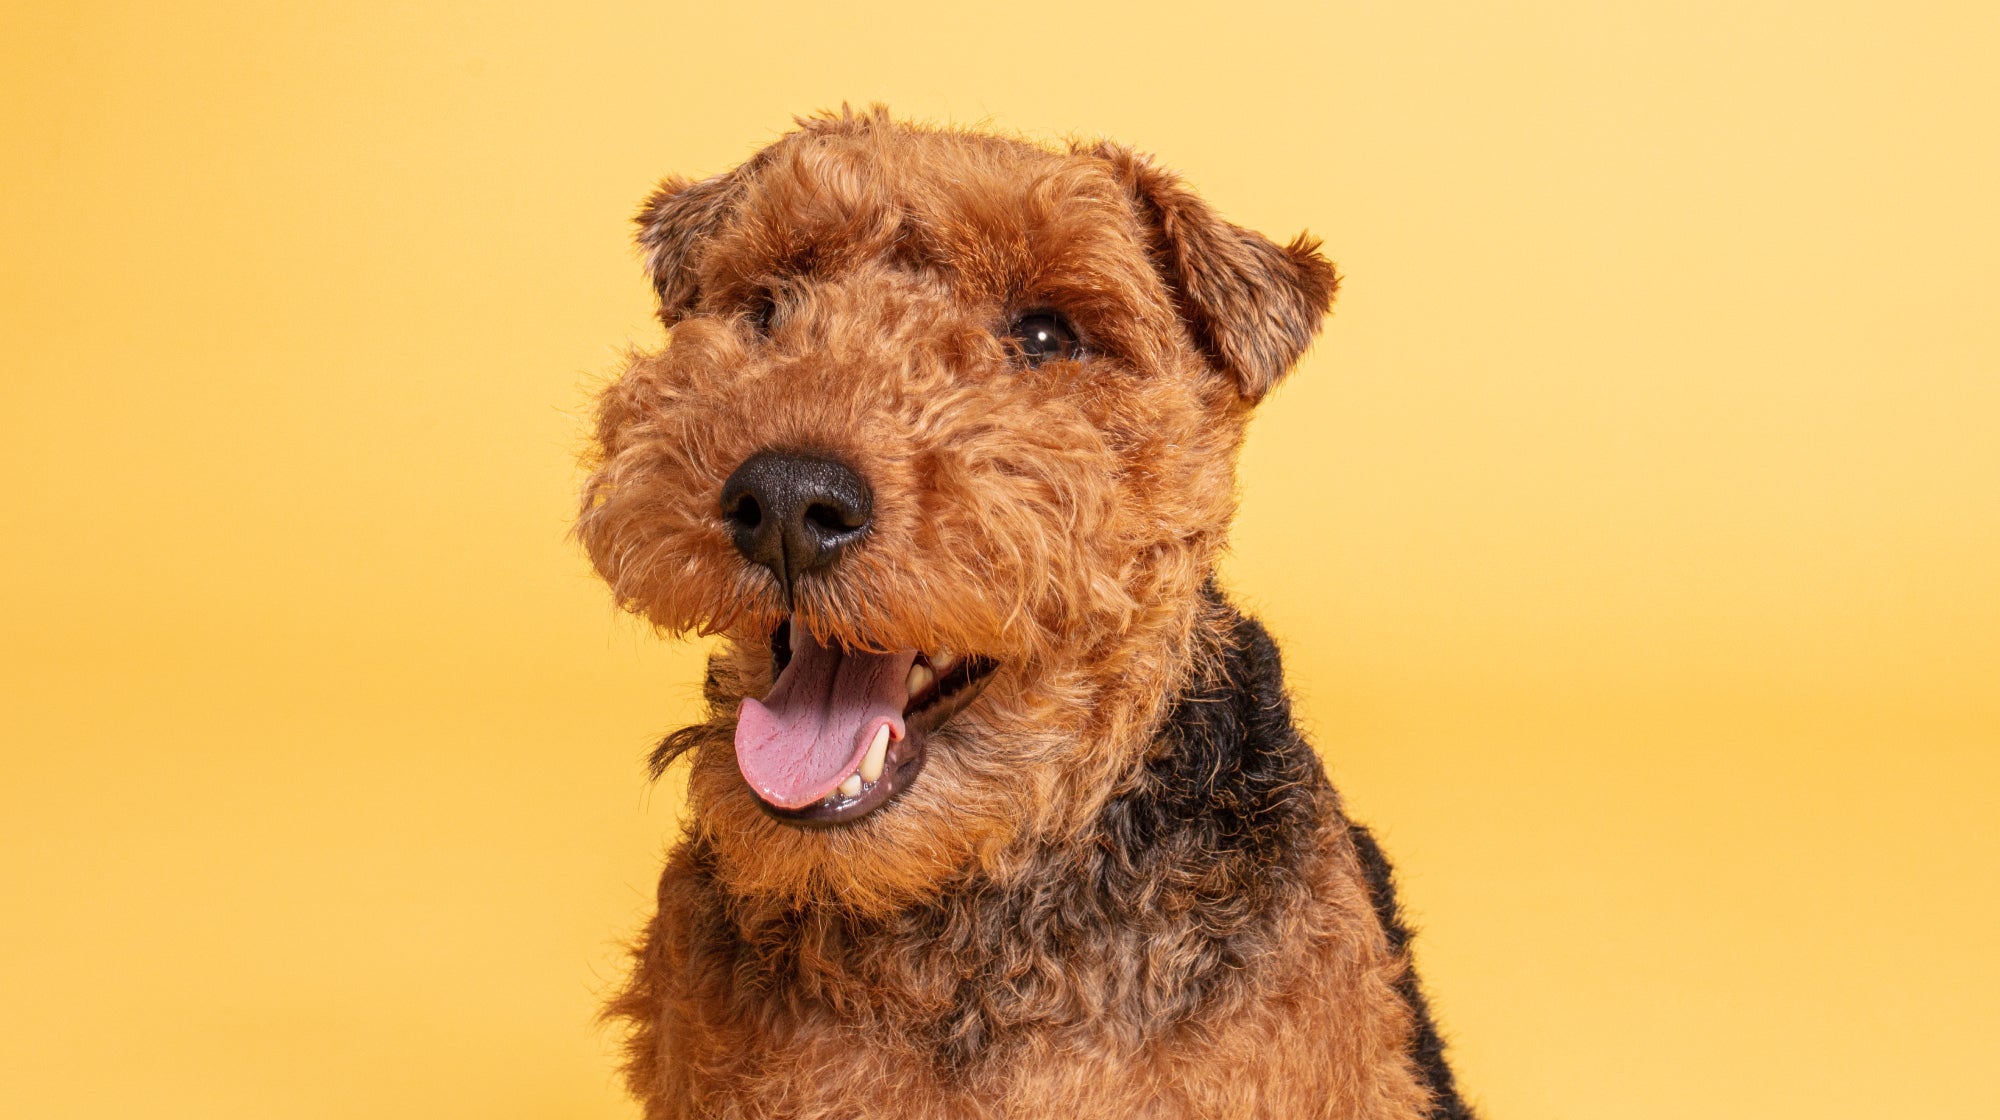 Welsh Terrier Dog 'smiling' at the camera, against a pale orange backdrop